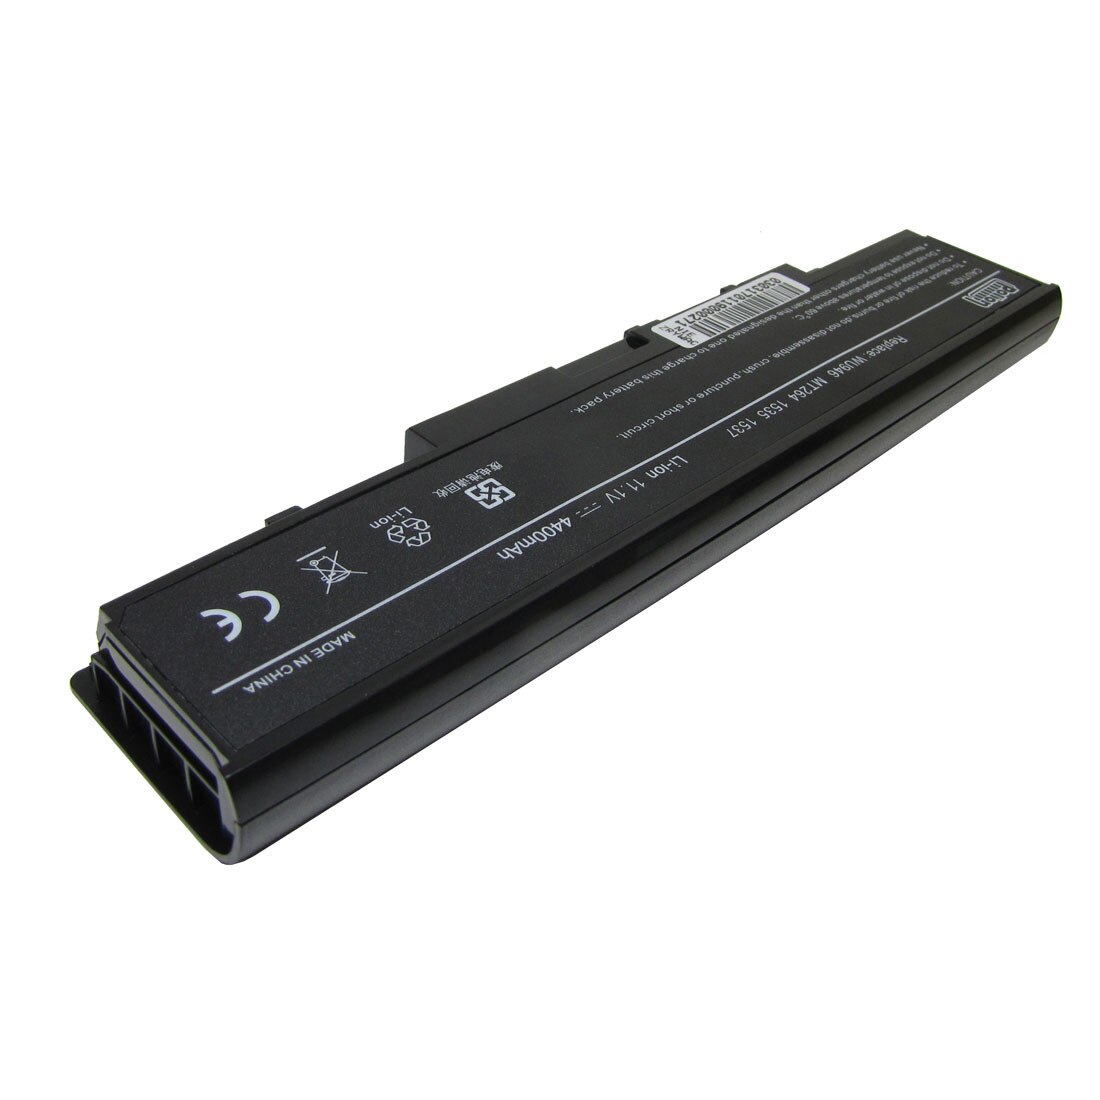 Tela Notebook Dell Studio PP39L - 15.6 Led - BB Baterias